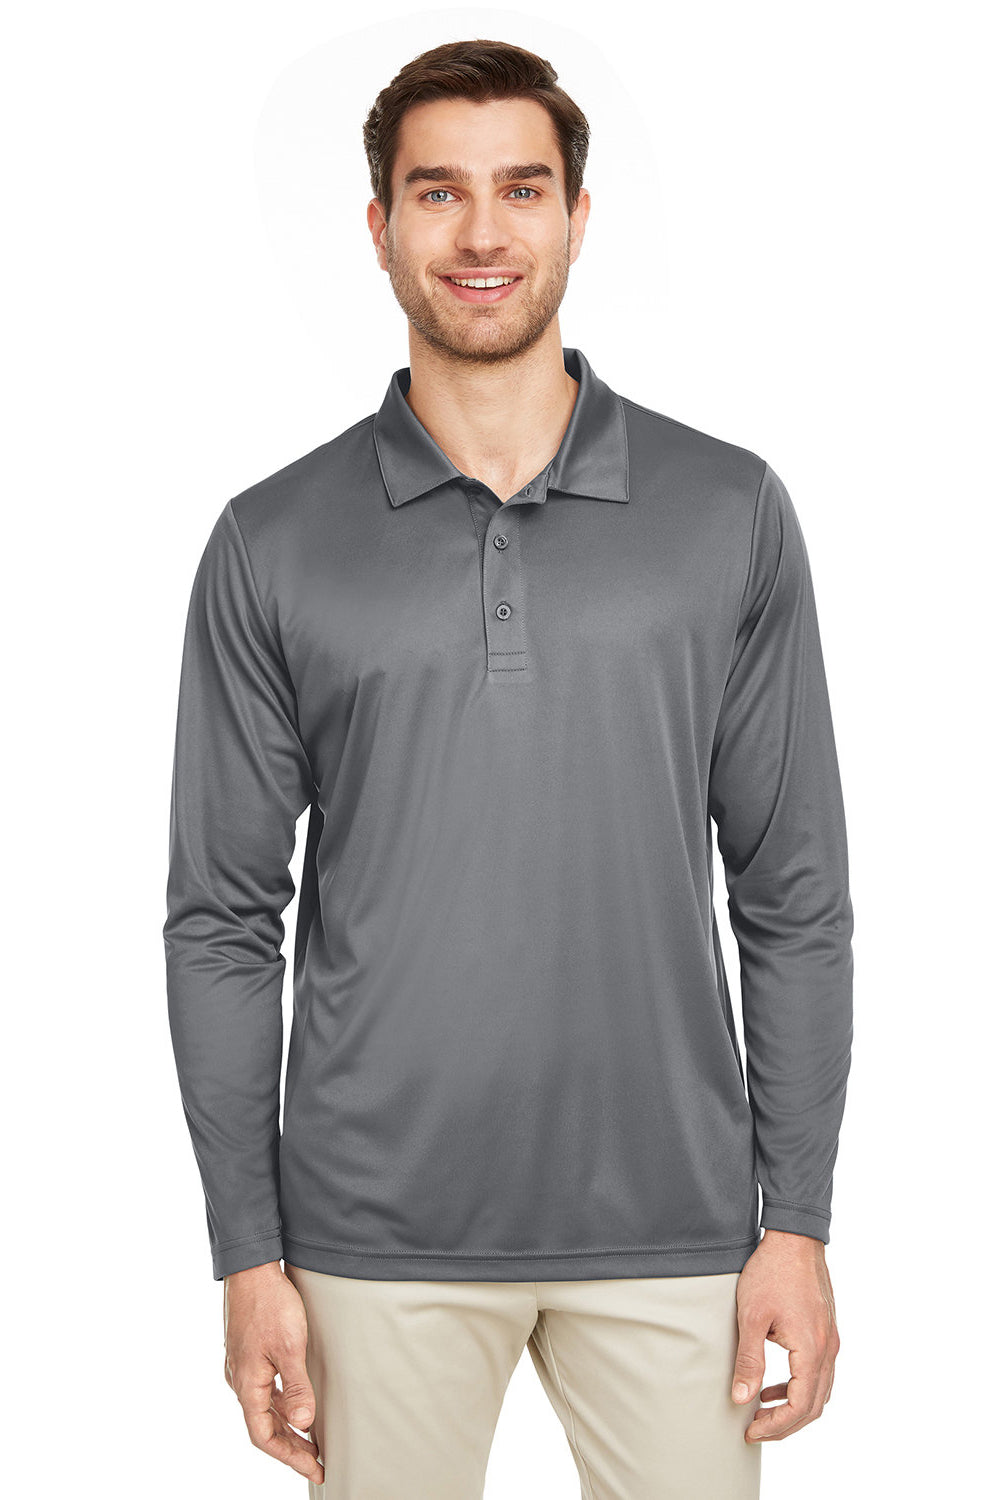 Team 365 TT51L Mens Zone Sonic Moisture Wicking Long Sleeve Polo Shirt Graphite Grey Front